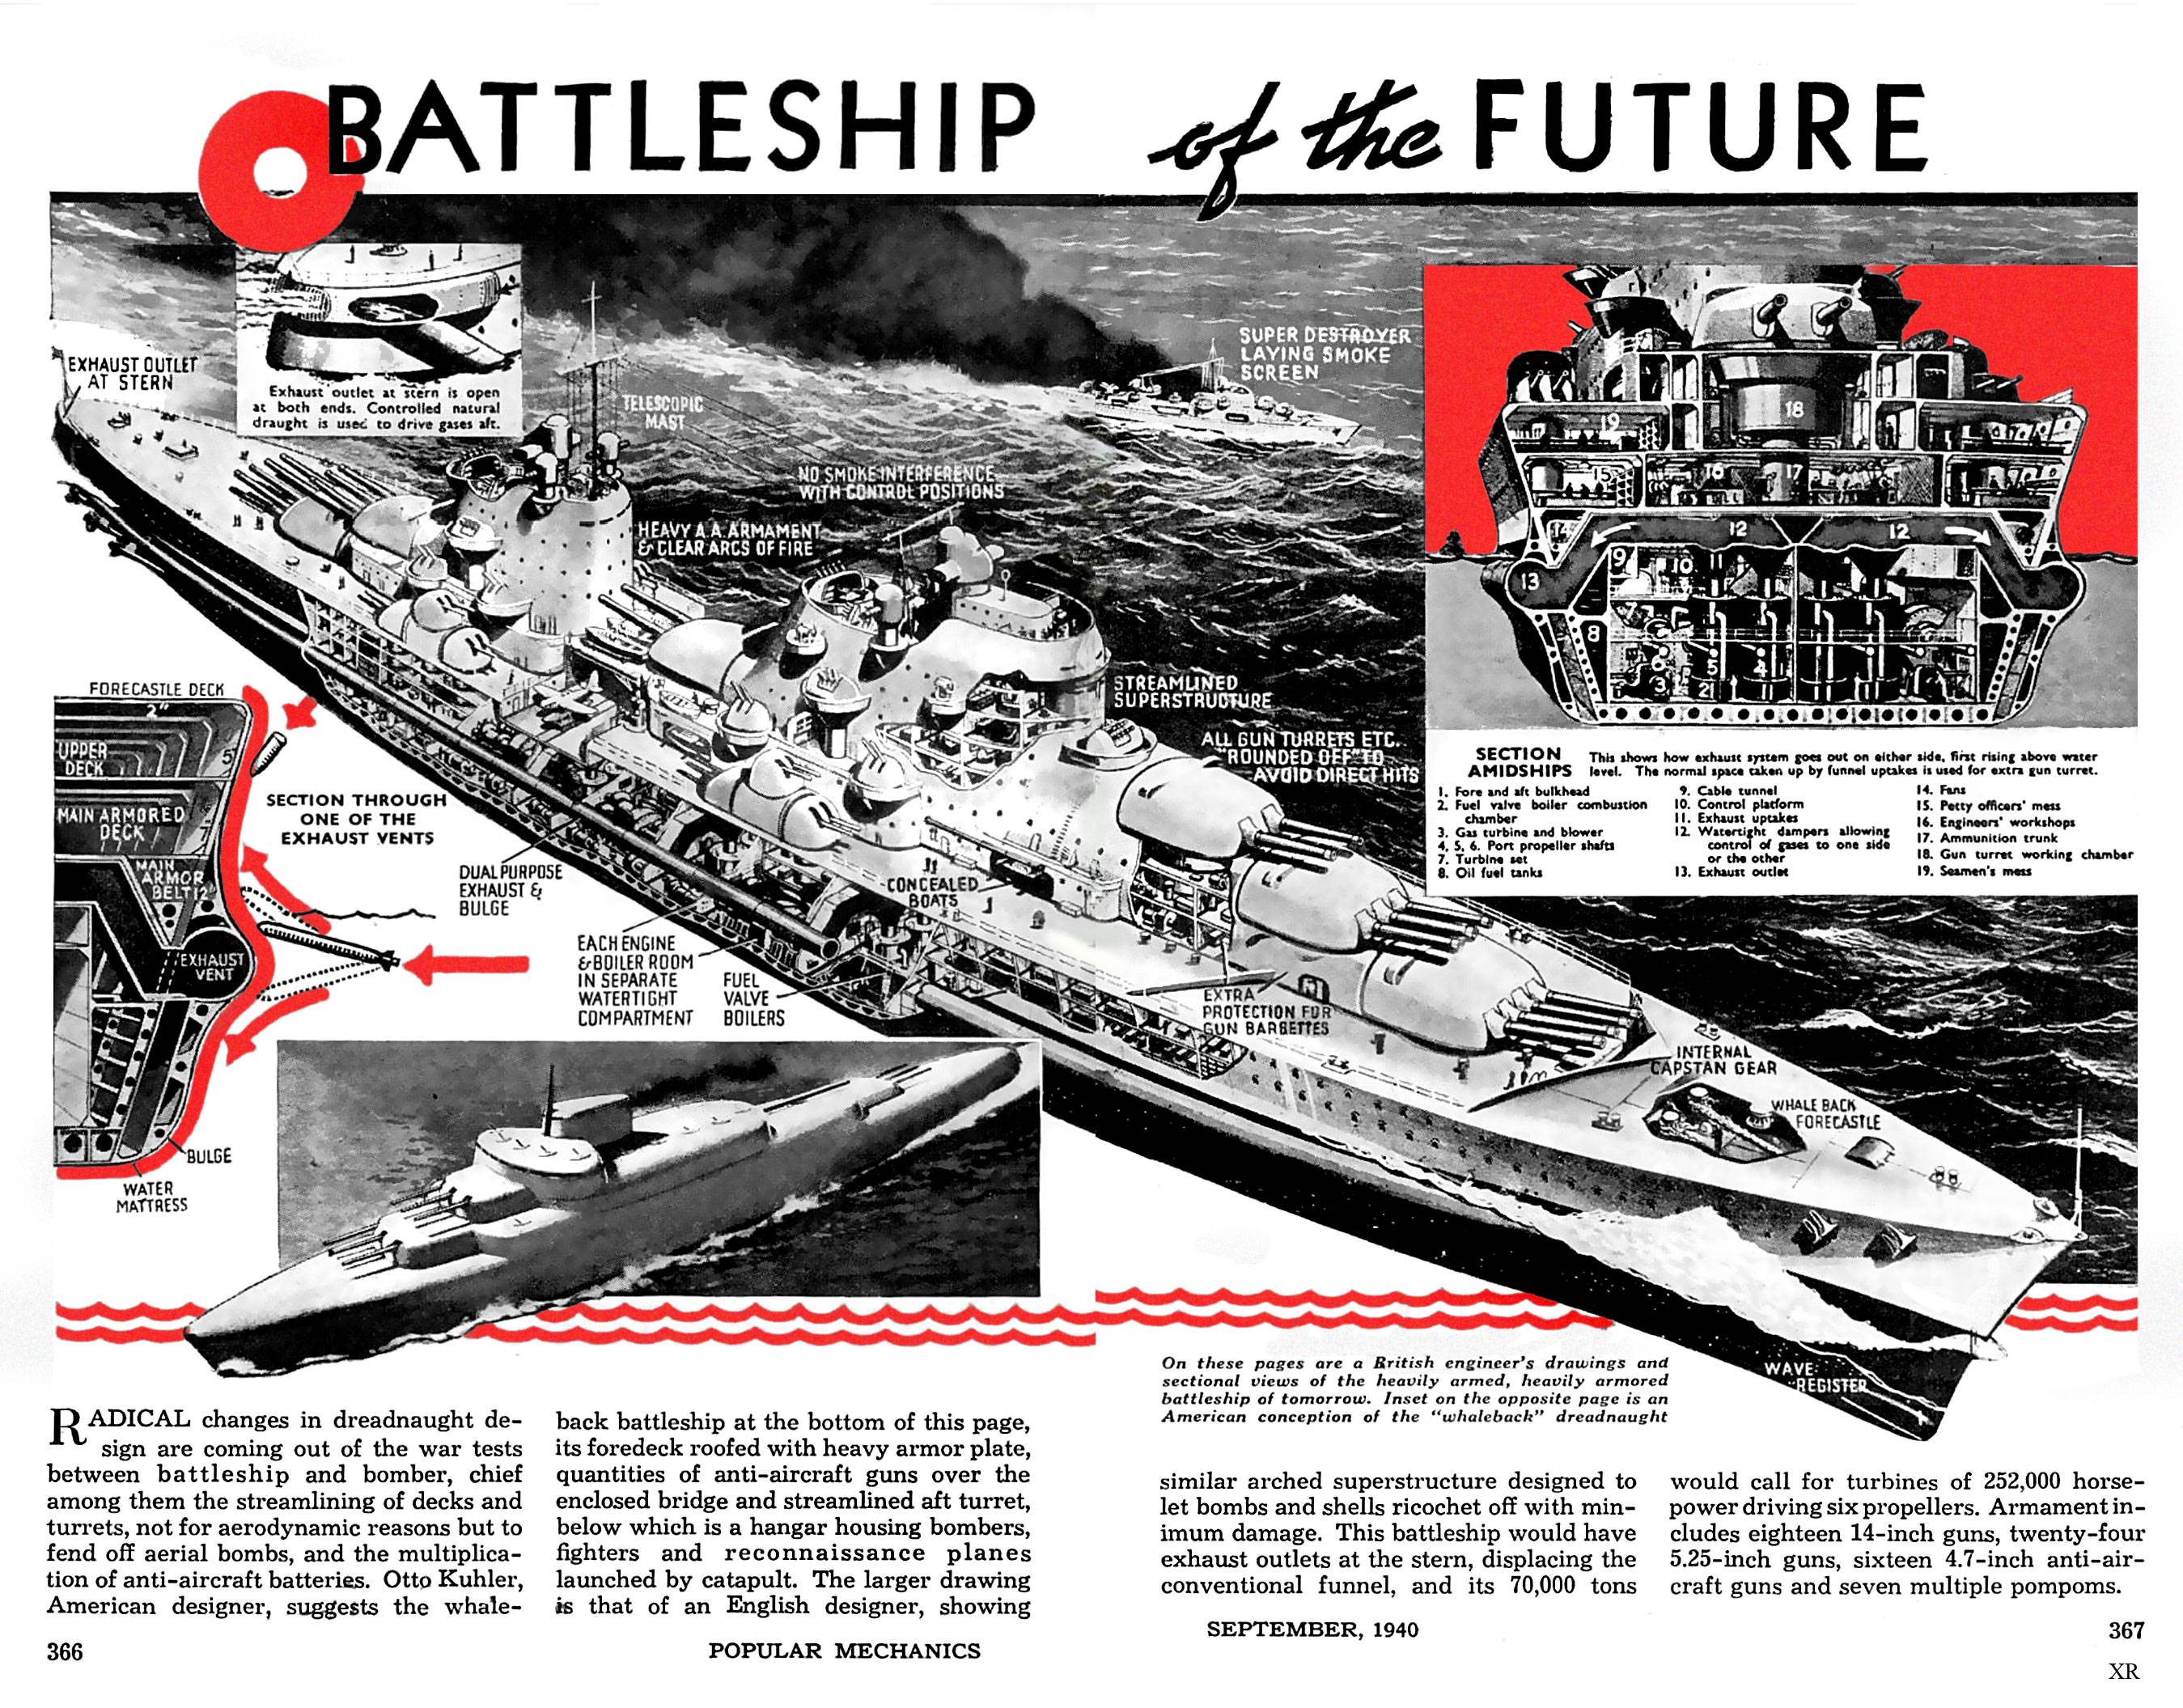 The Battleship of the Future 1940.jpg